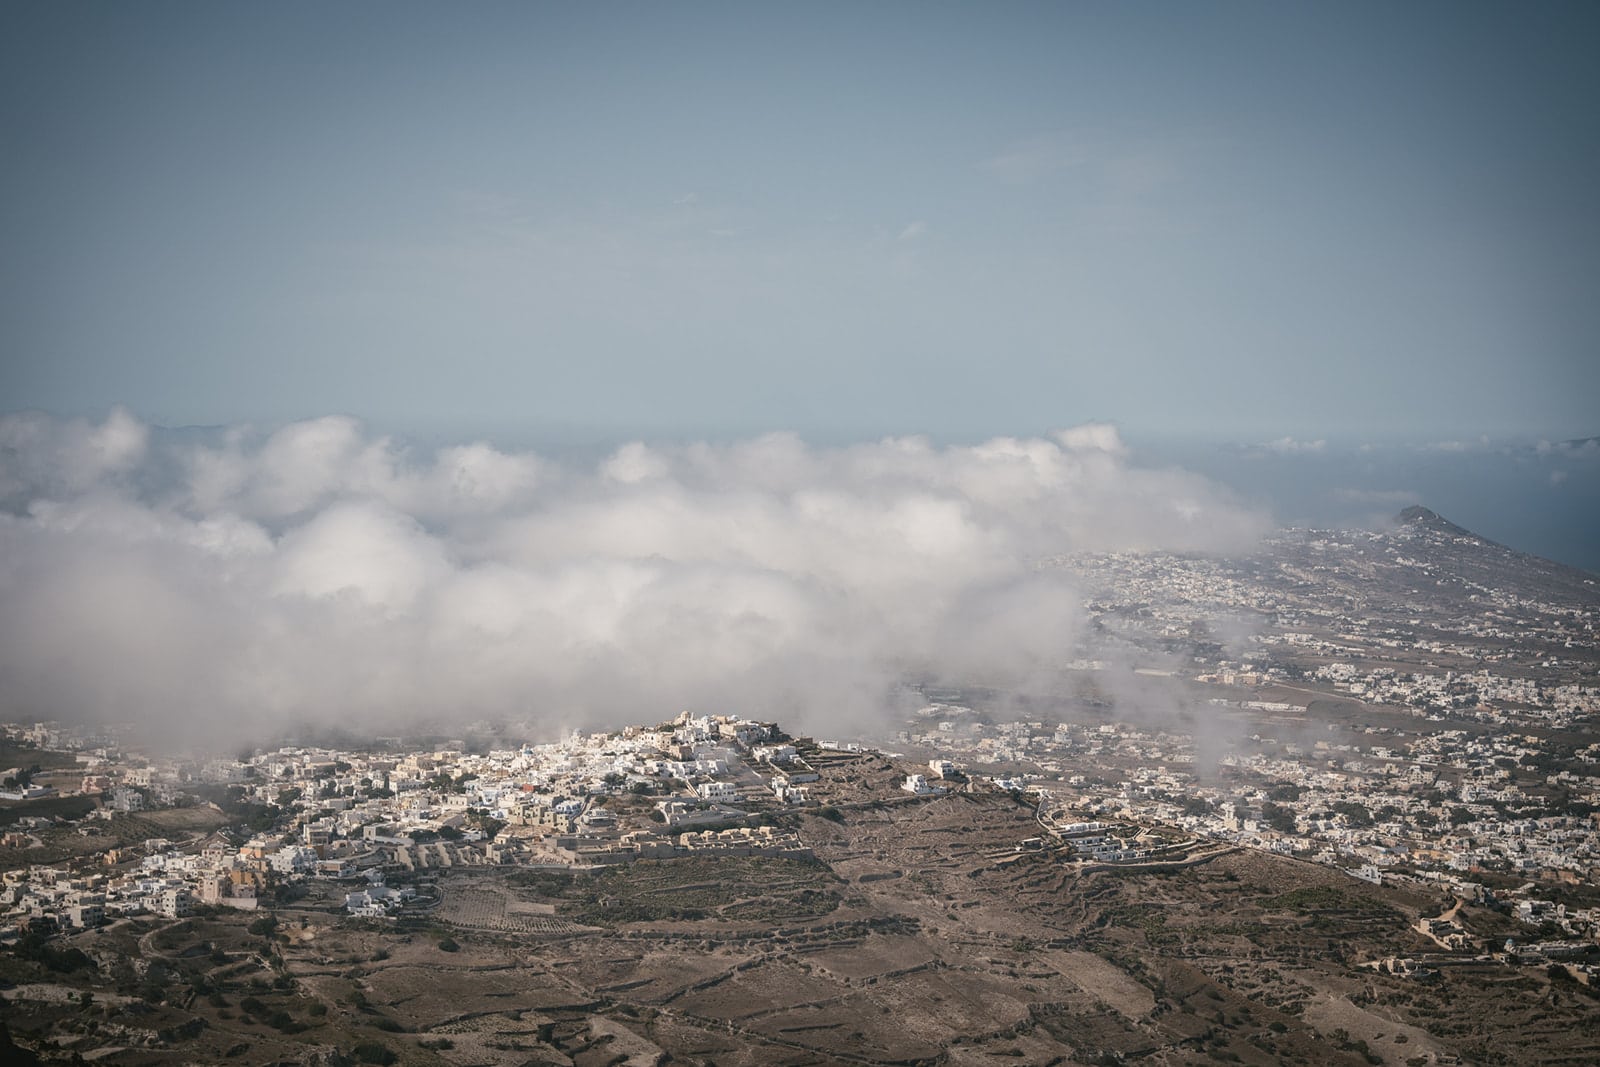 Santorini spreads below, a breathtaking backdrop to their elopement dreams